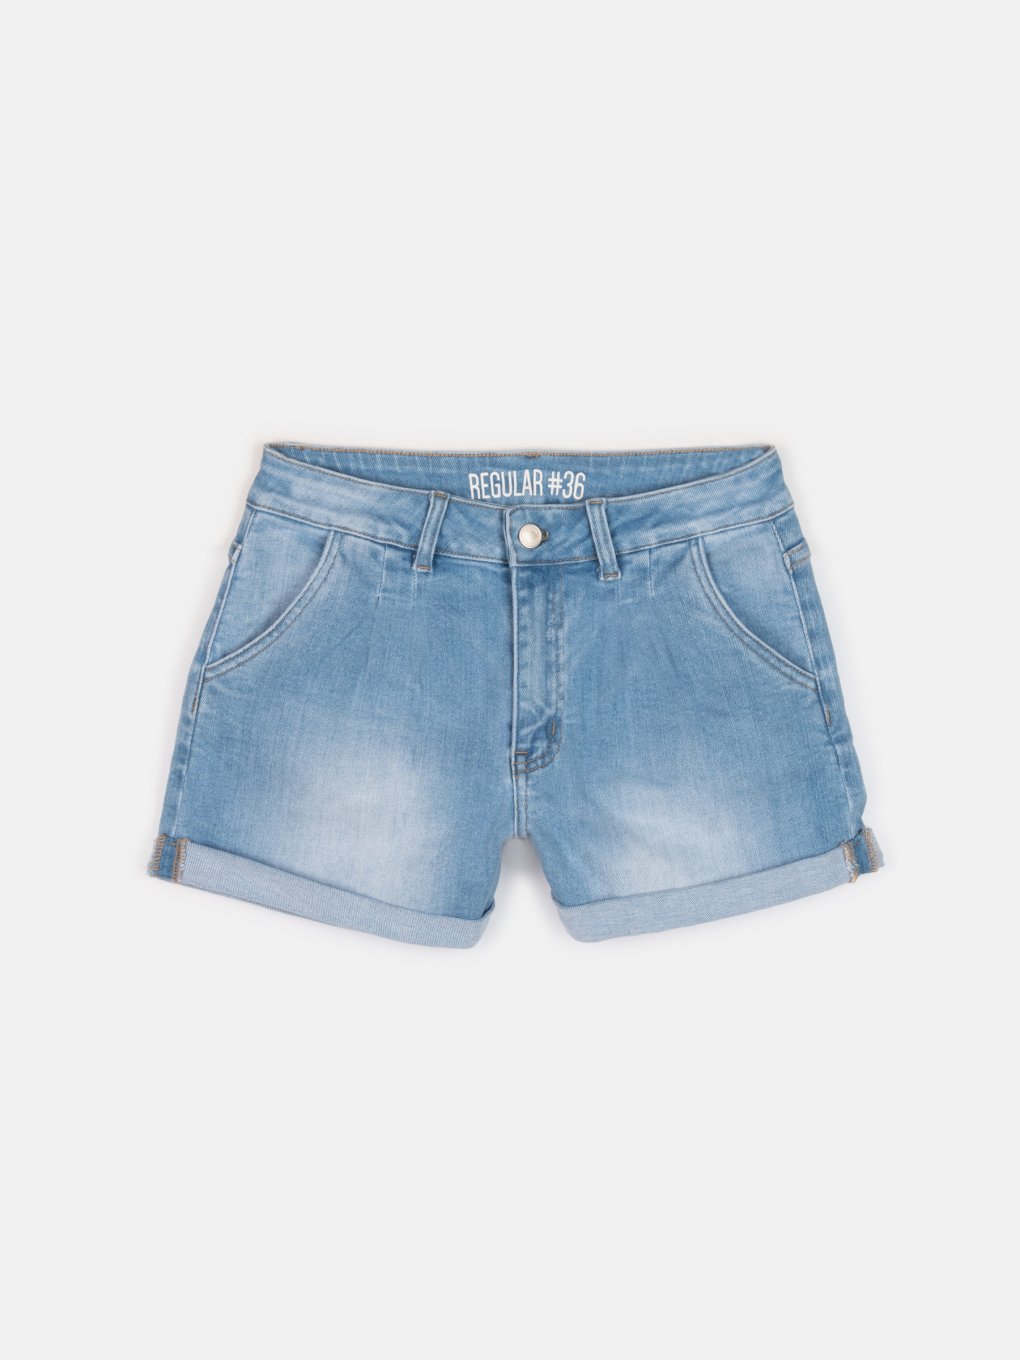 Denim shorts in light blue wash